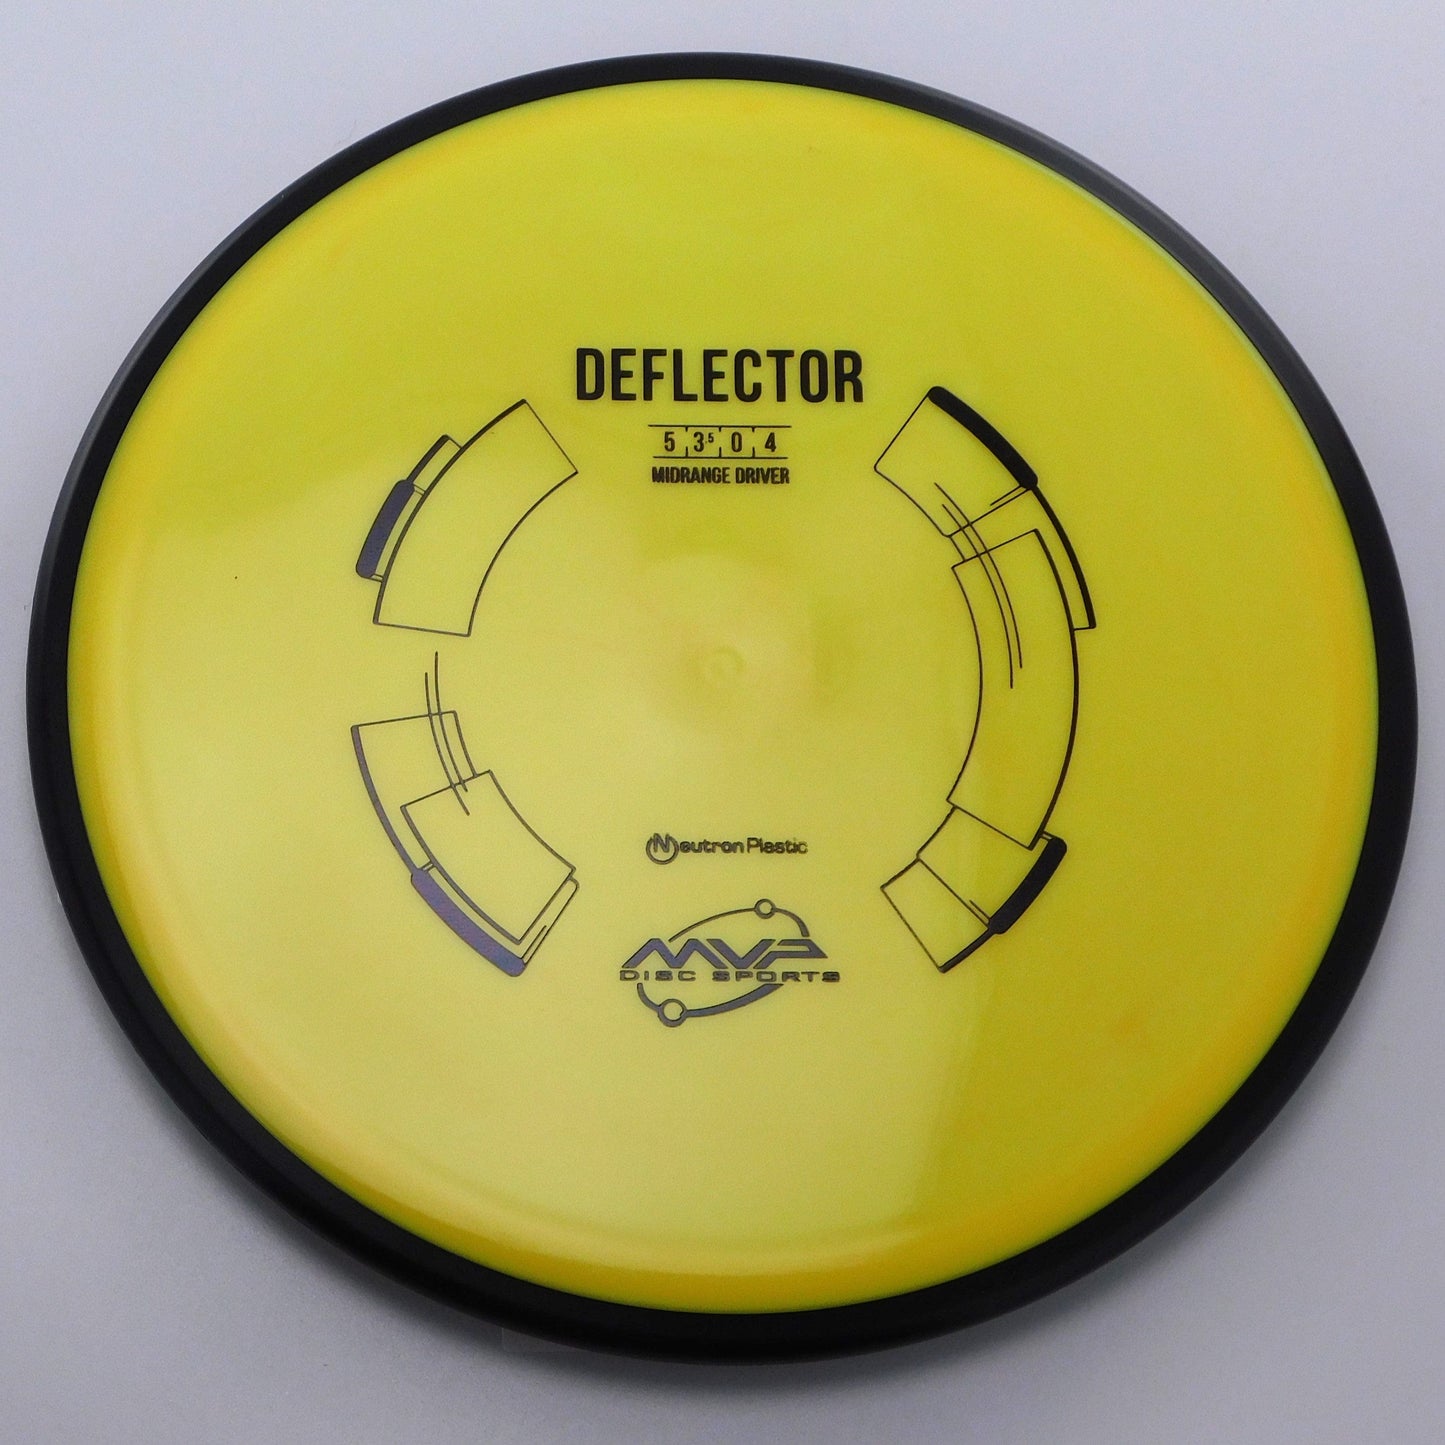 MVP Deflector - Neutron 5│3.5│0│4 177.5g - Yellow - MVP Deflector - Neutron - 100457